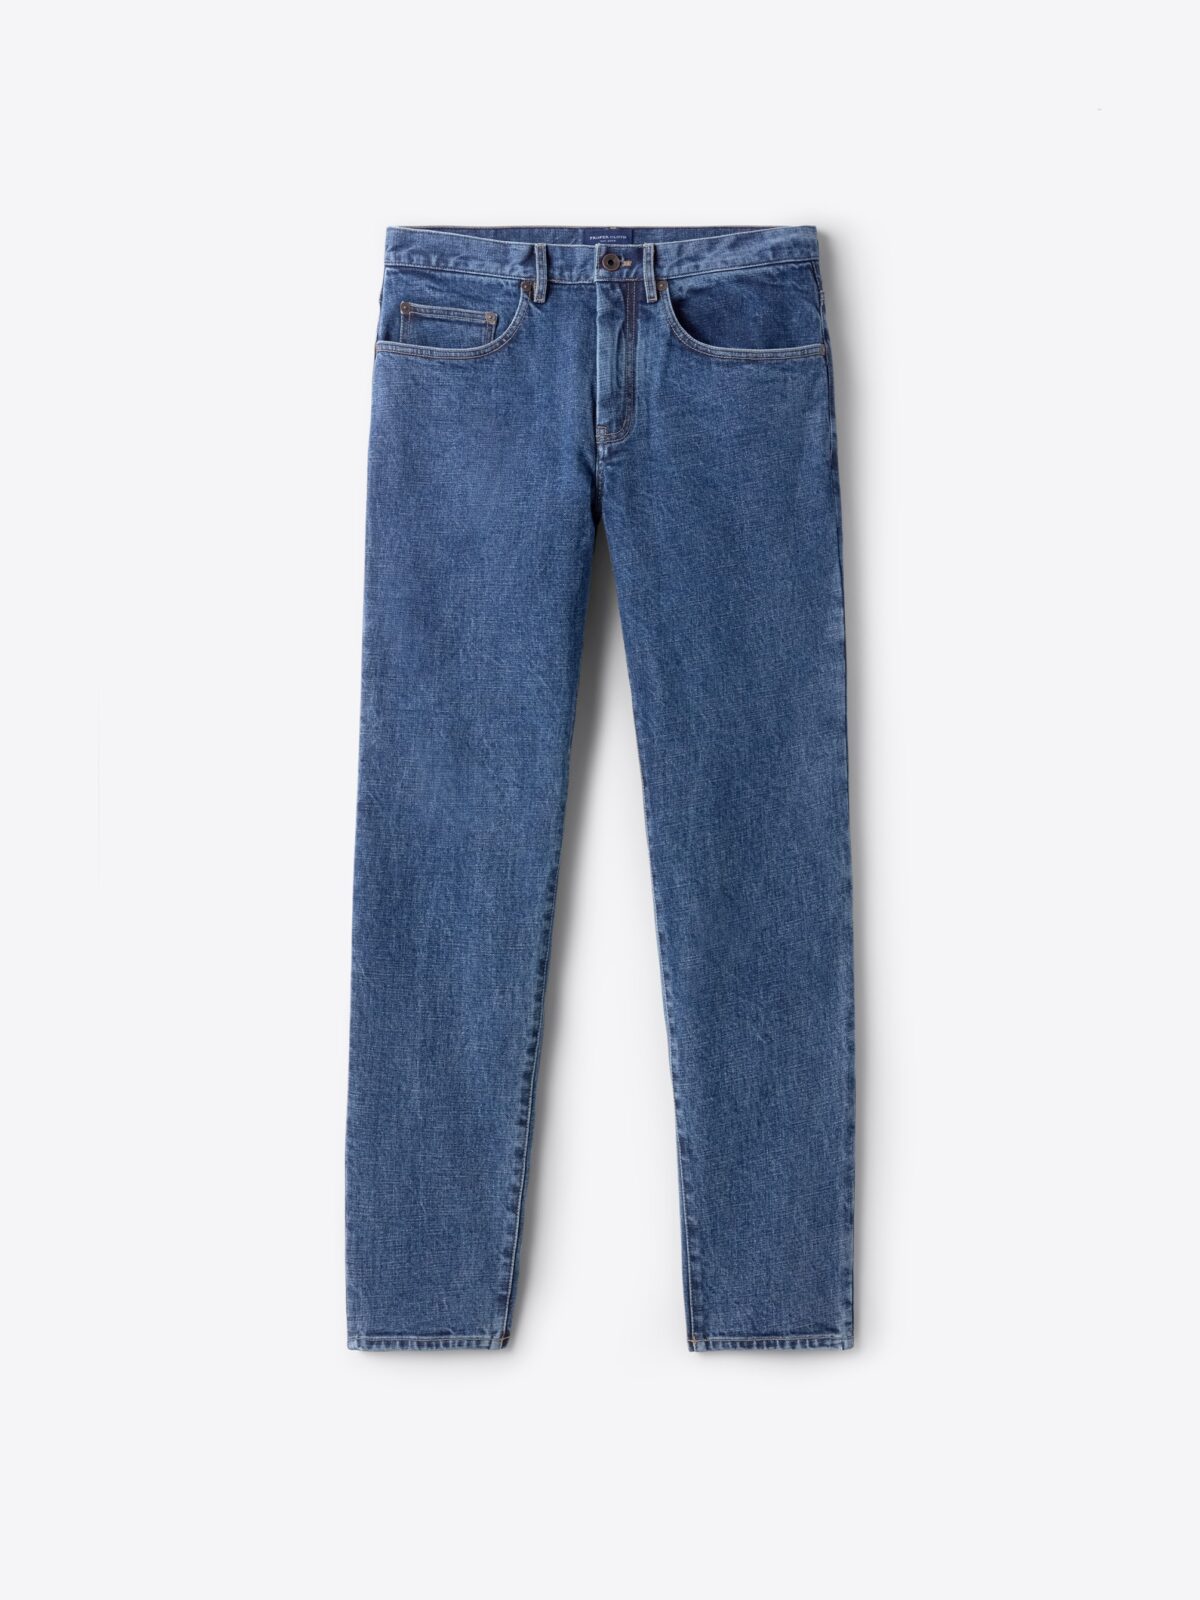 Japanese 14oz Medium Wash Indigo Stretch Jeans - Custom Fit Pants